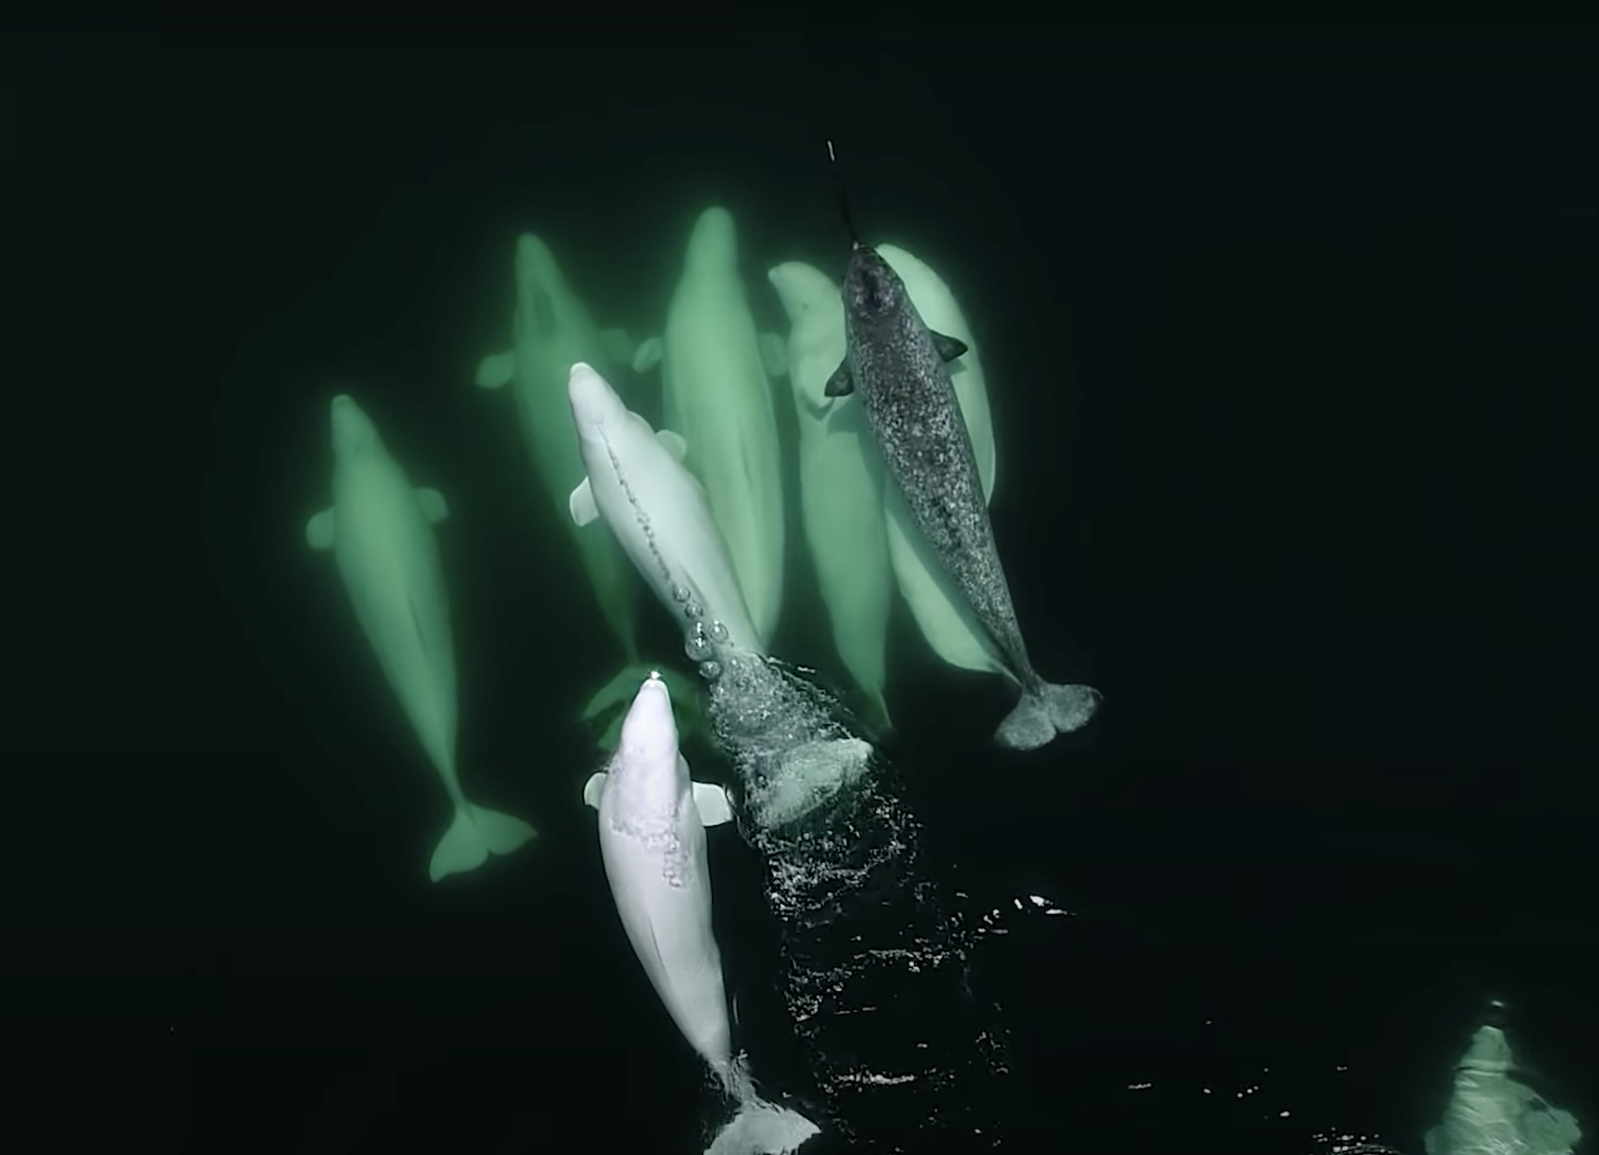 Adopted Lone Narwhal Traveling Among Belugas Could Produce Narluga Calves |  Smart News| Smithsonian Magazine